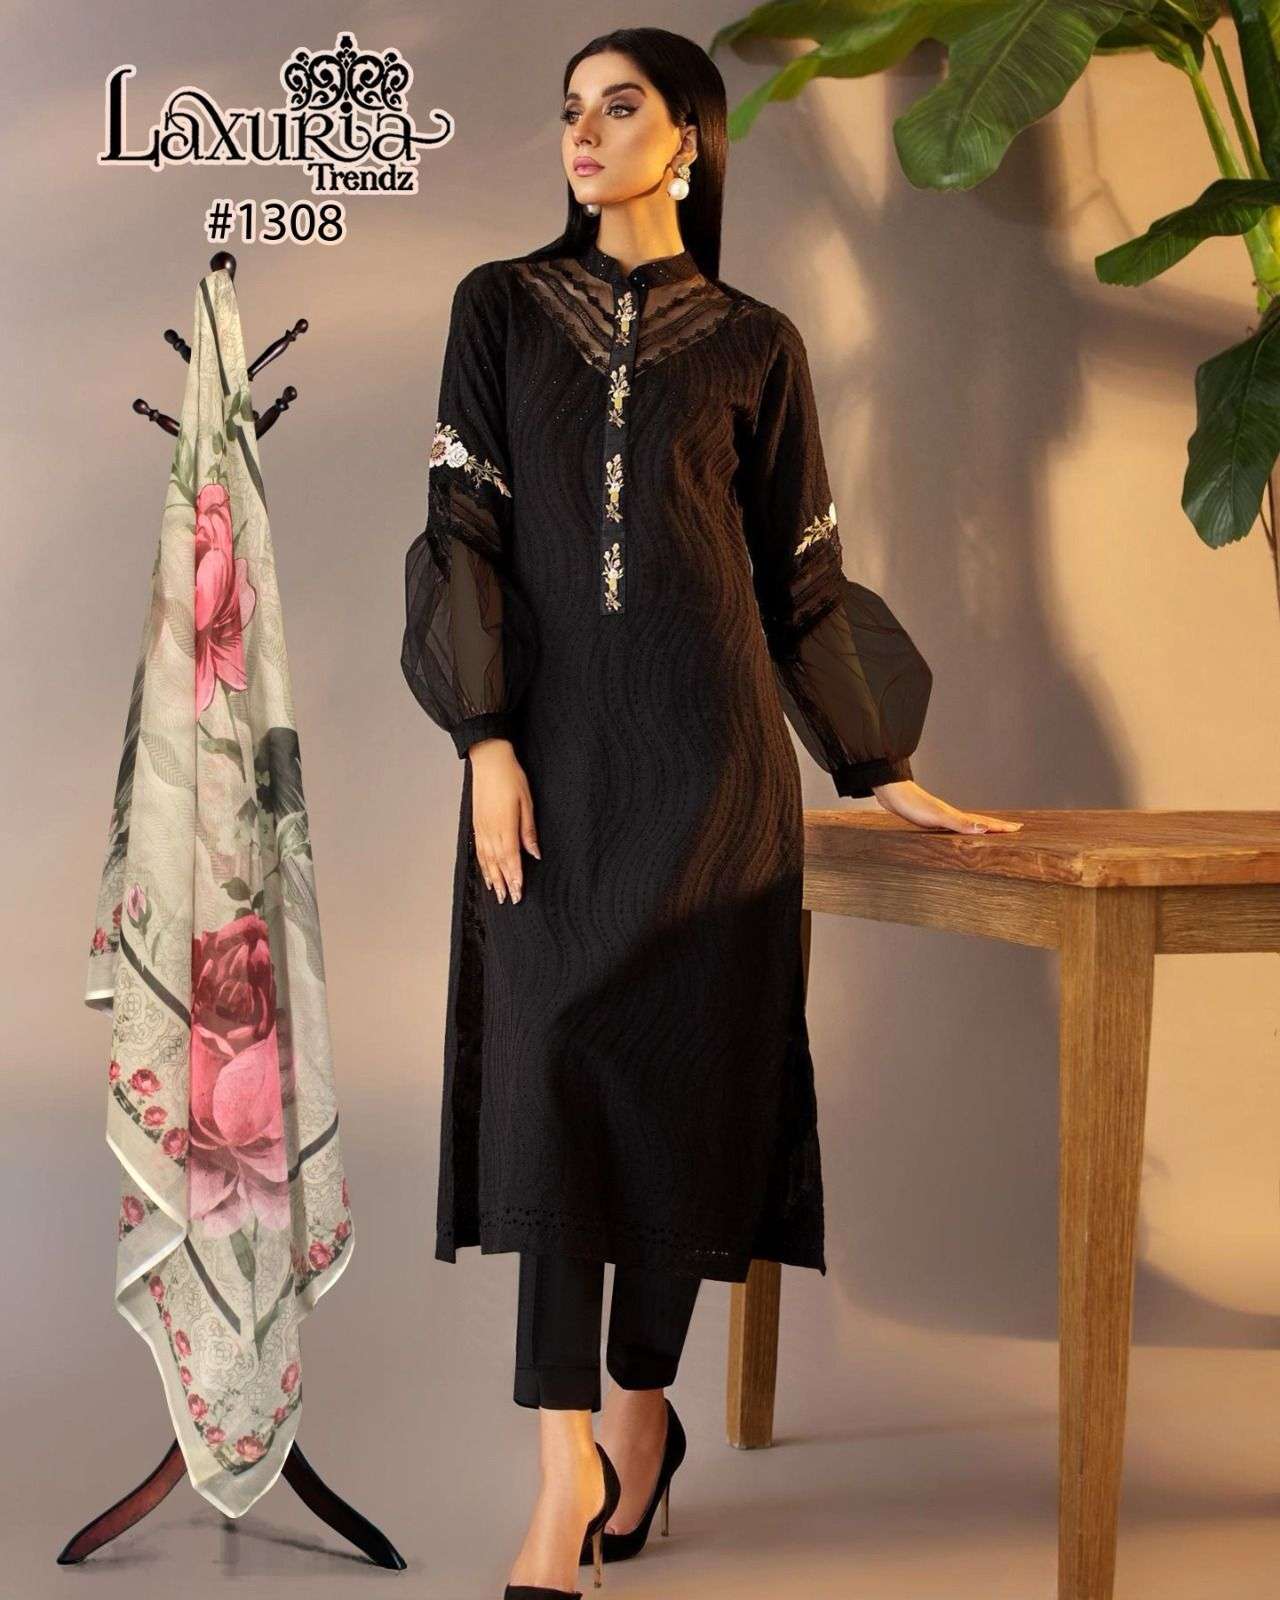 Kurti Design Dress 2023 | Stylish short dresses, Sleeves designs for  dresses, Dress design patterns